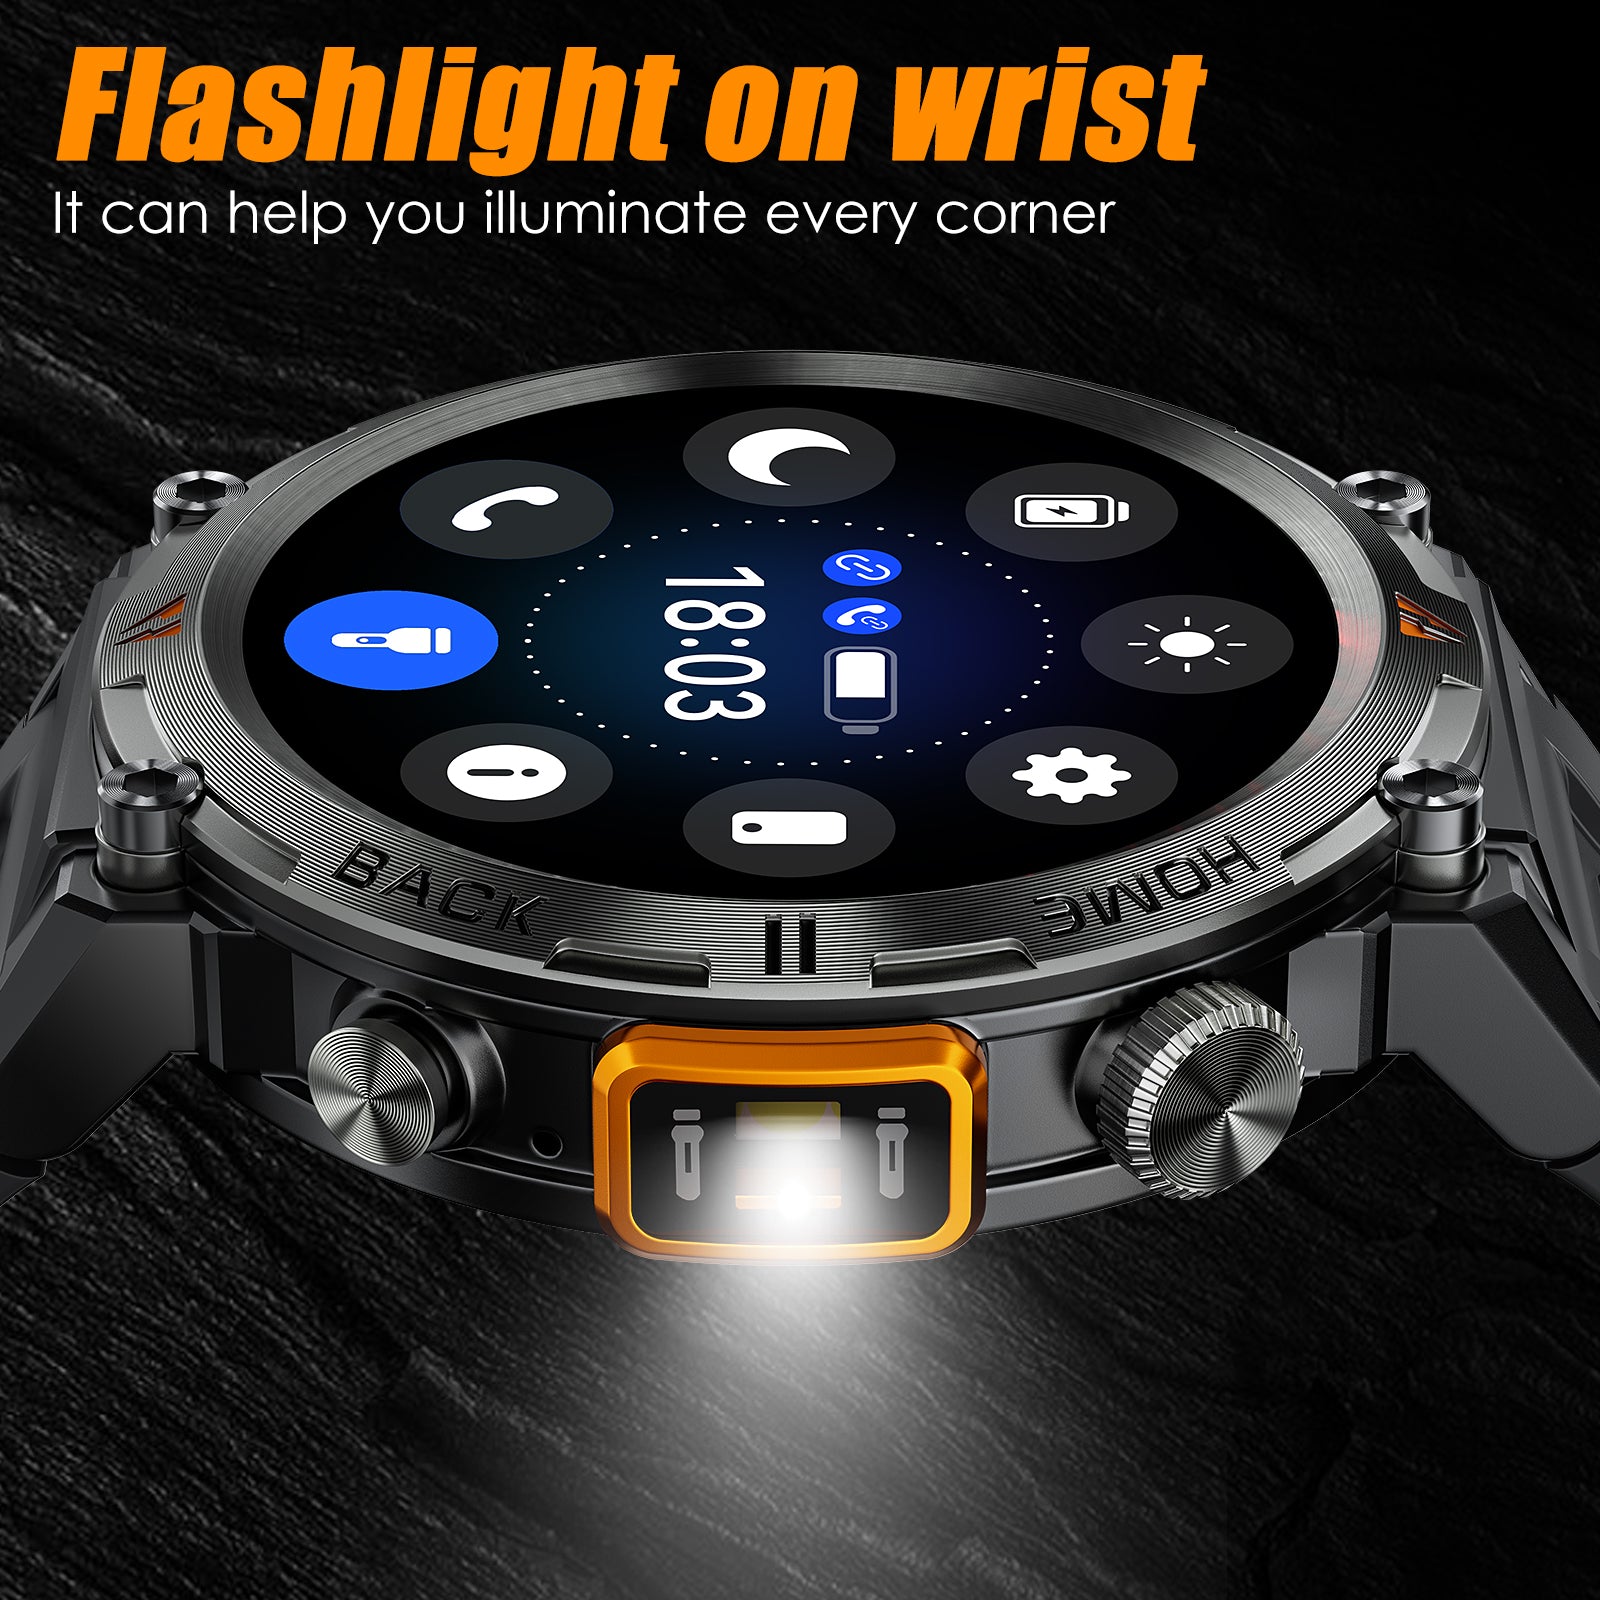 eigiis smartwatch ke3 with With Flashlight – vwar